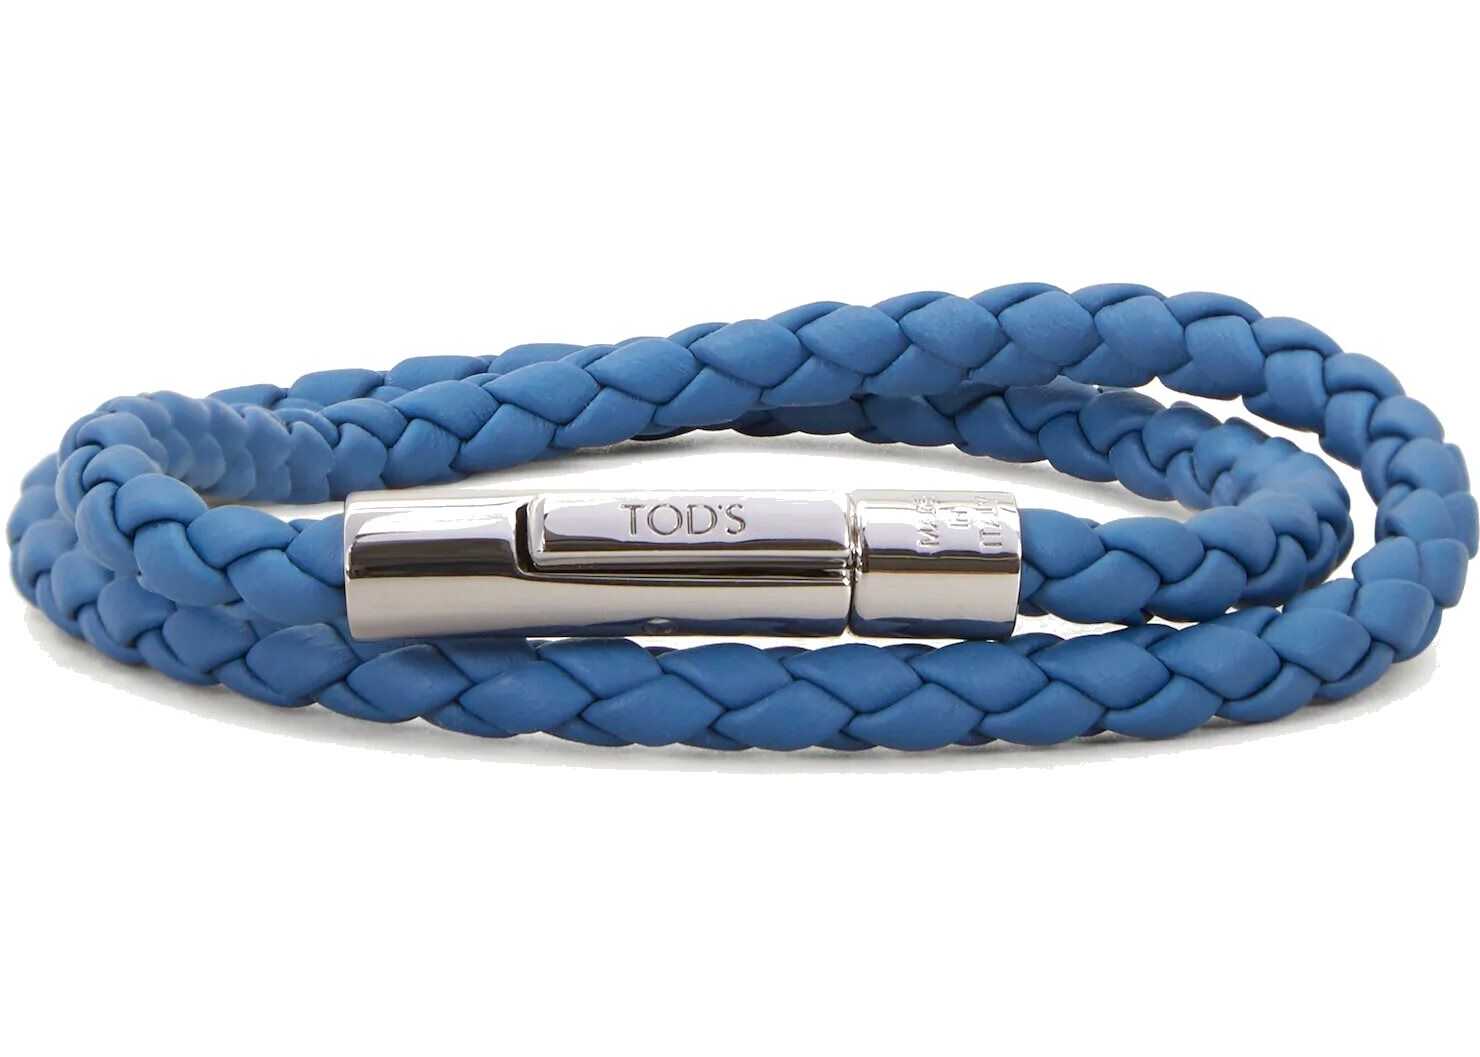 TOD'S Leather Bracelet BLUE image0